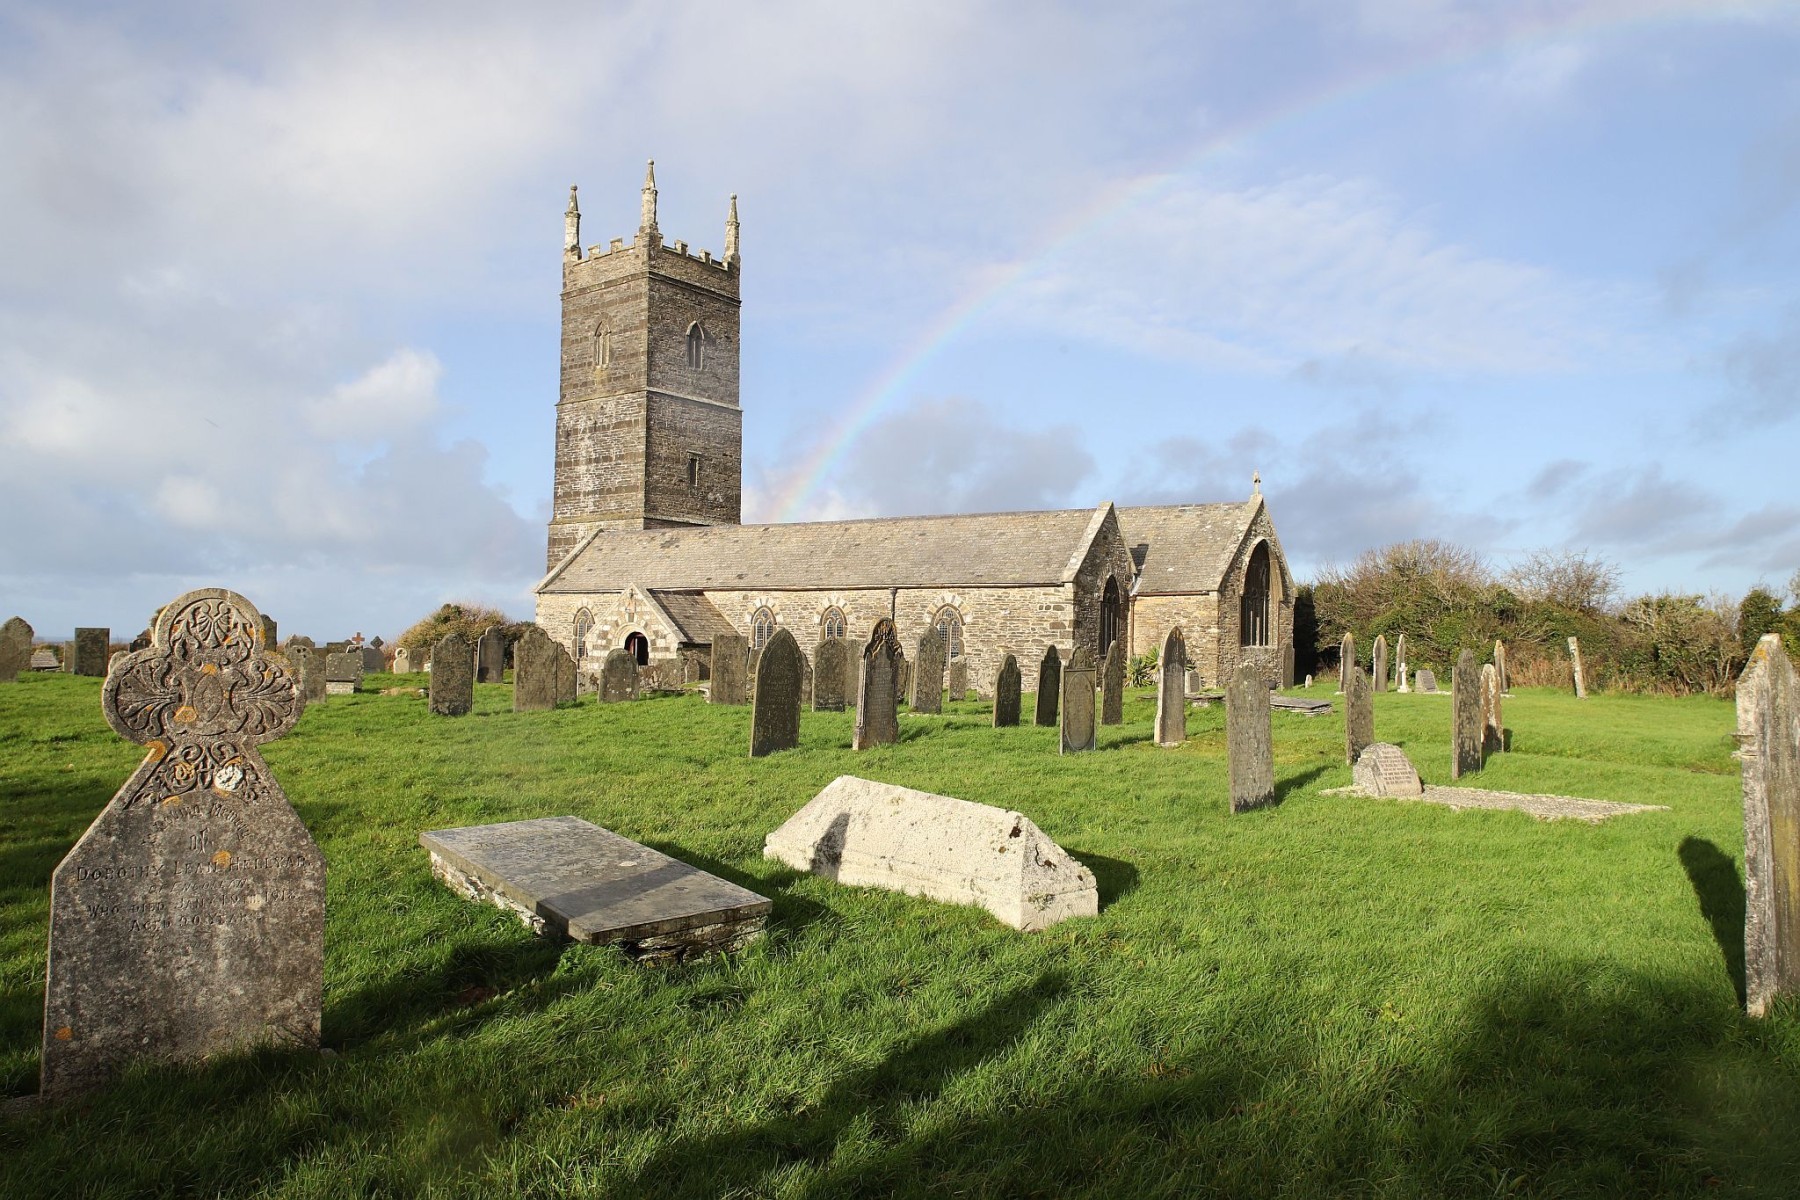 Rainbow over St. Eval Parish Church near Newquay in Cornwall